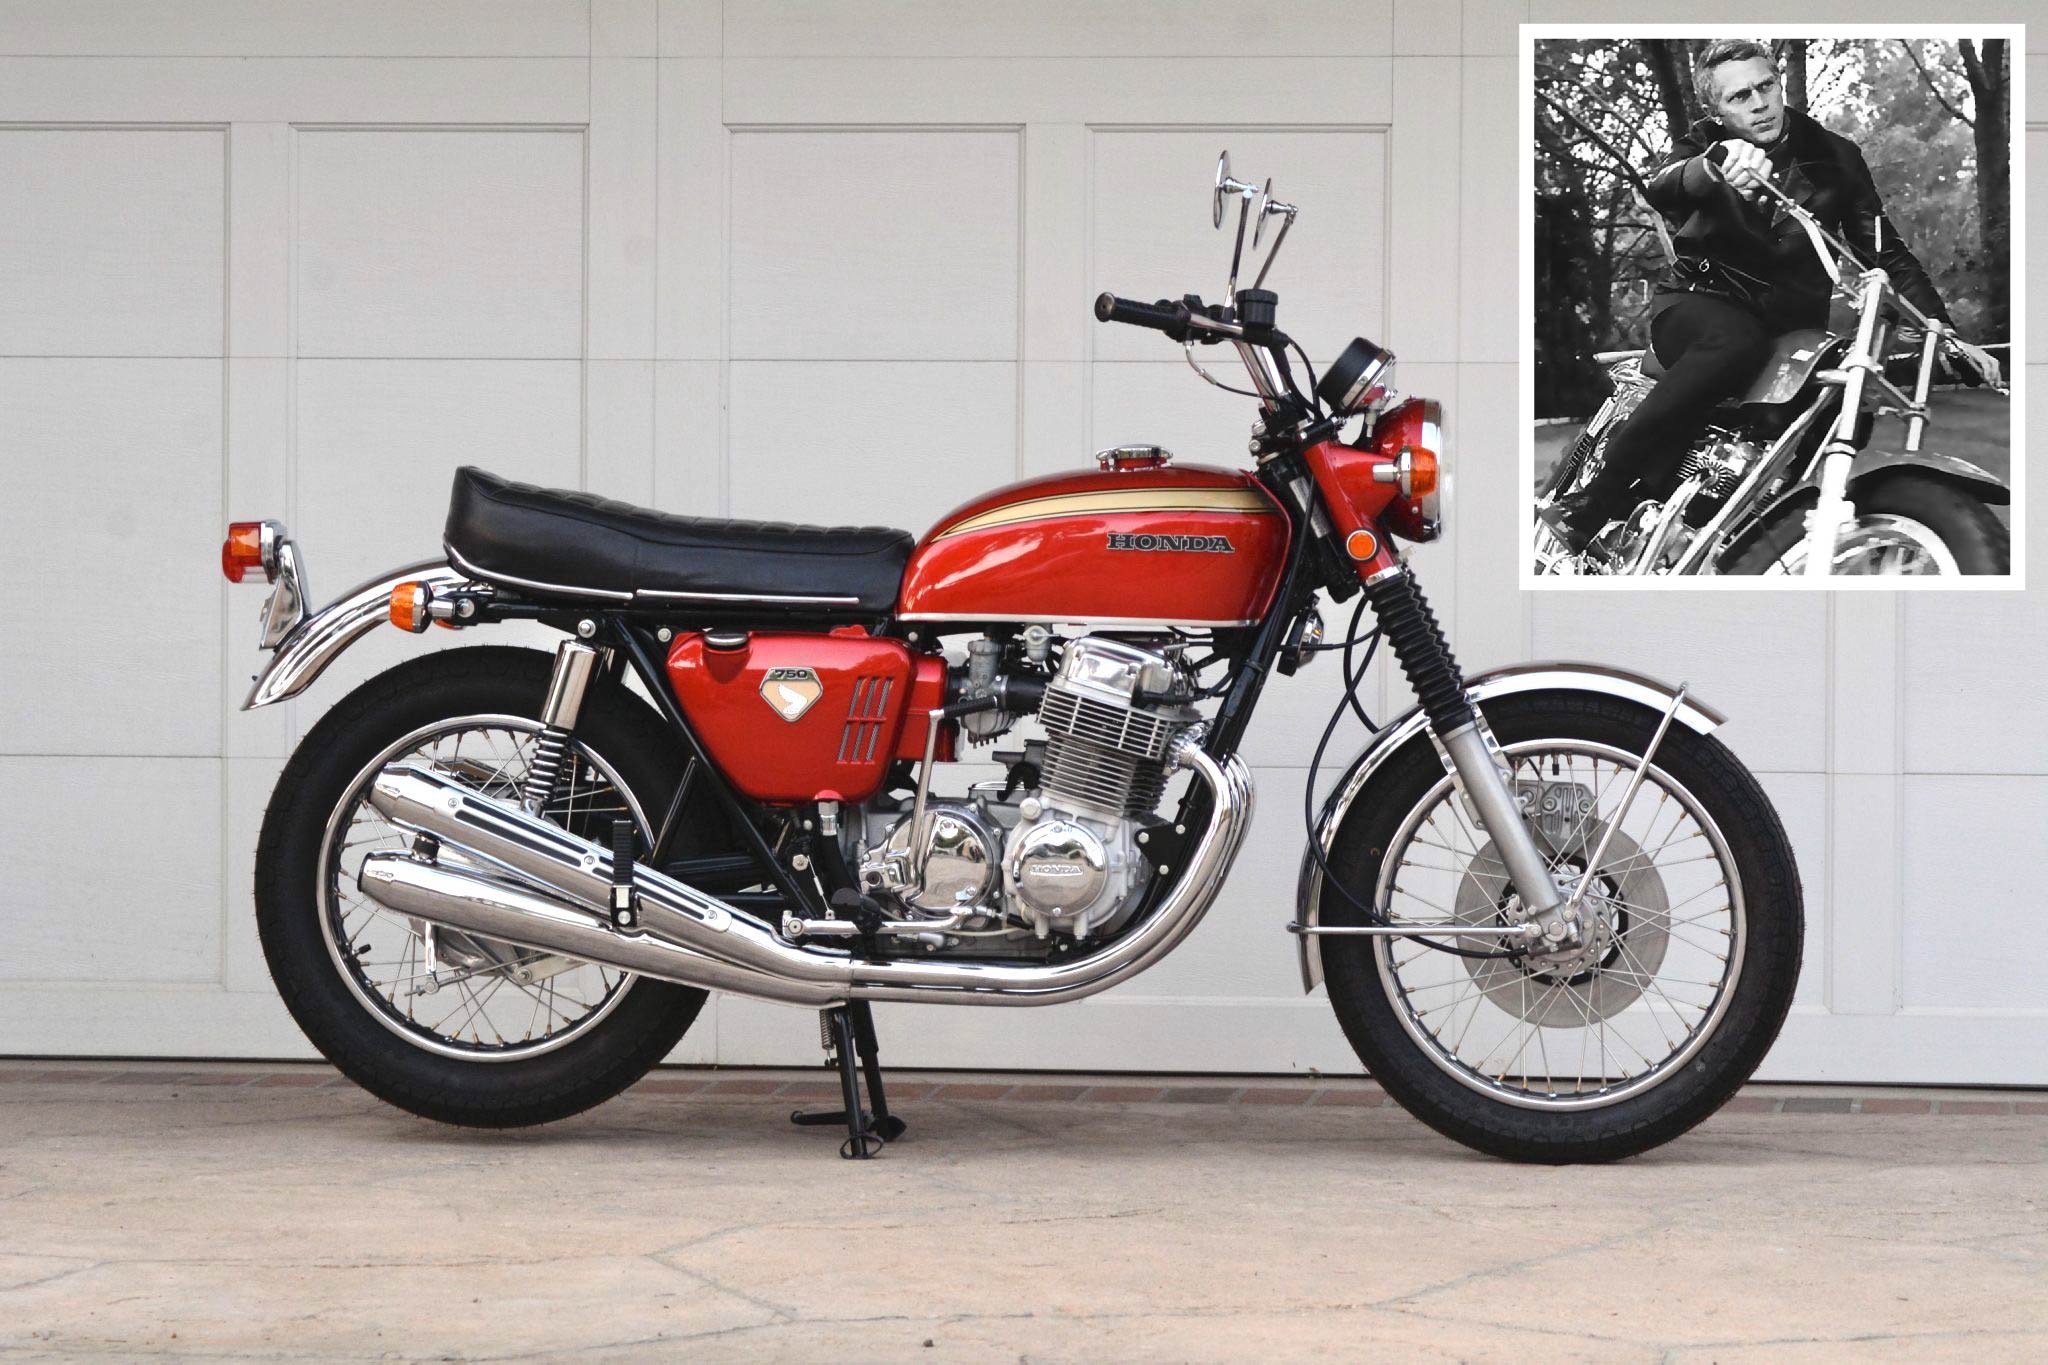 There’s An Ex-Steve McQueen “Sandcast” 1969 Honda CB750 For Sale via @Silodrome